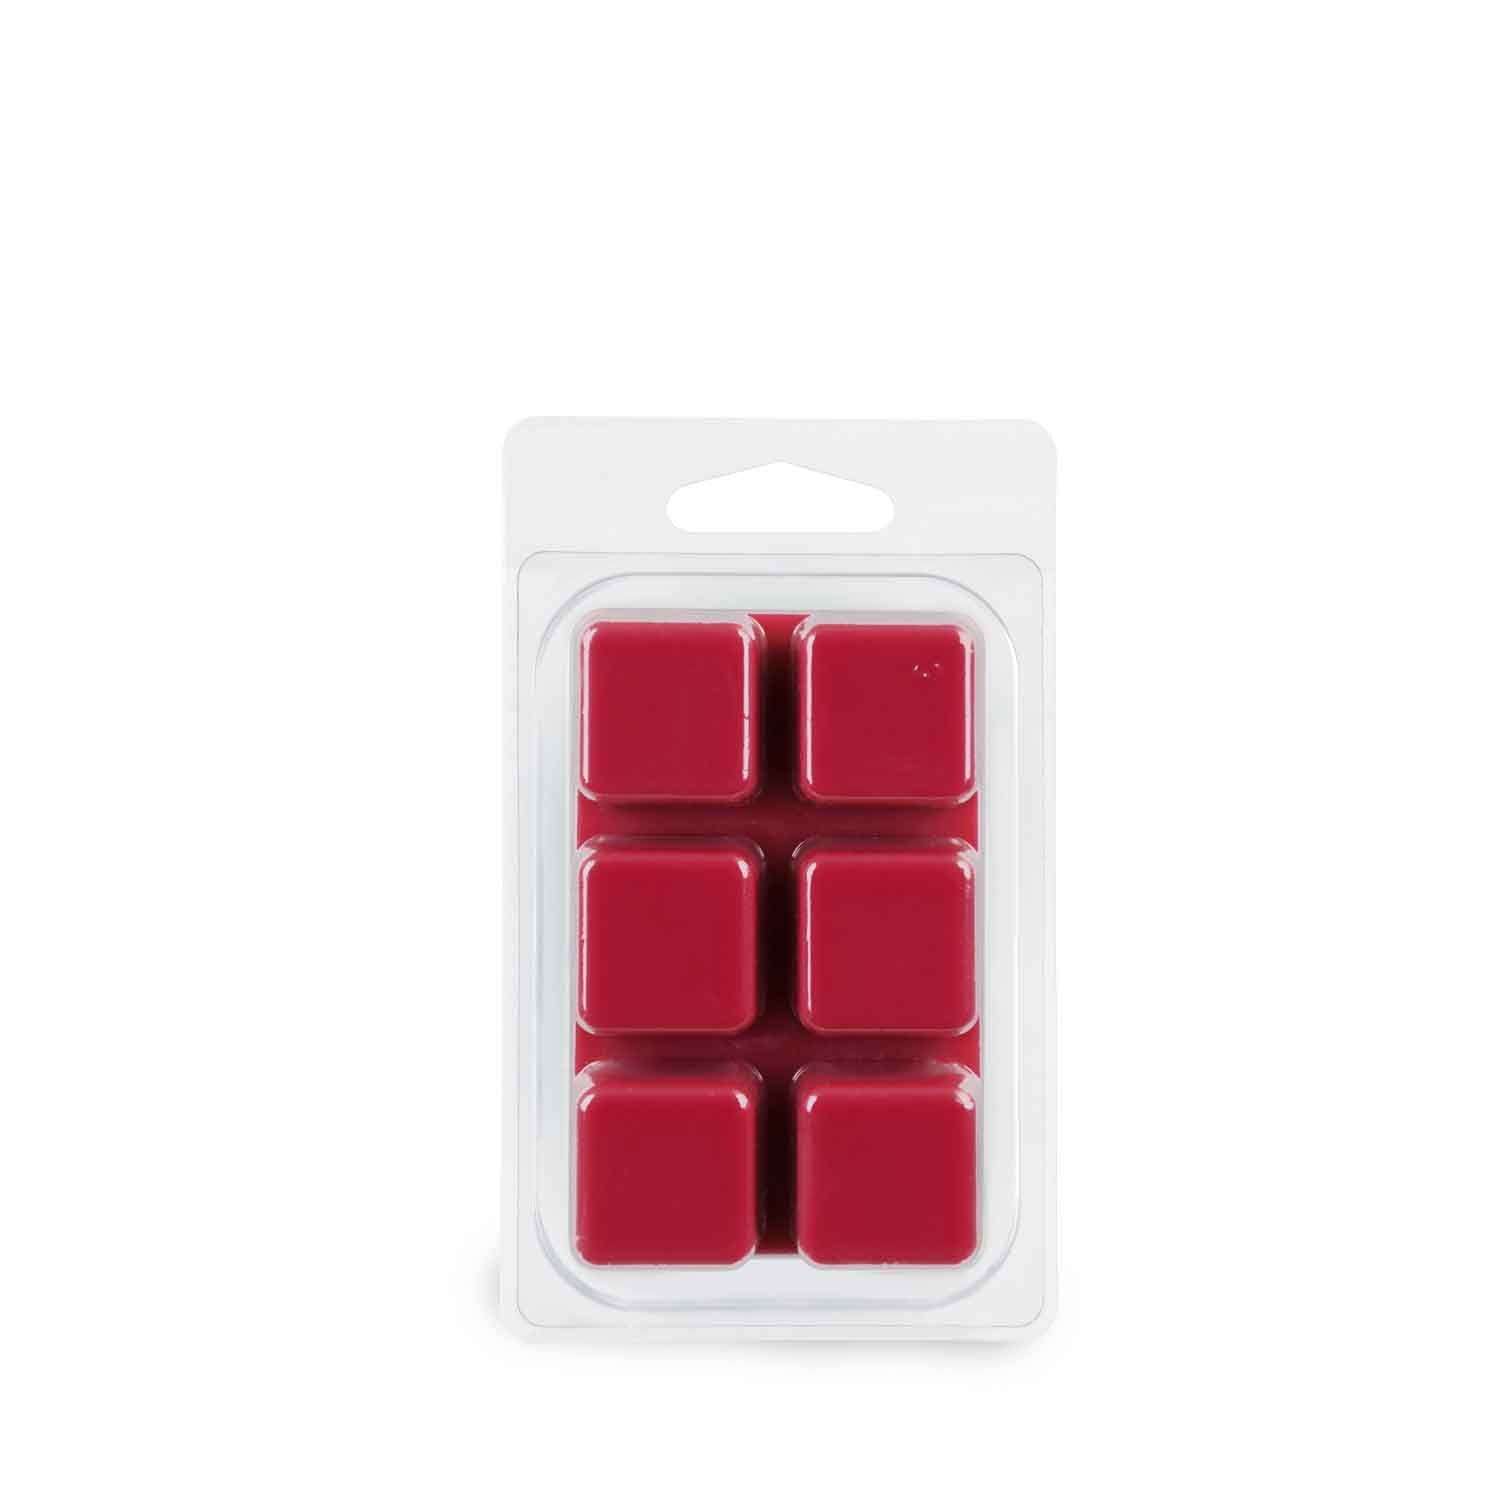 Scented Wax Melts -Set of 8 Assorted Wax Warmer Cubes/Tarts - Jasmine Rose  